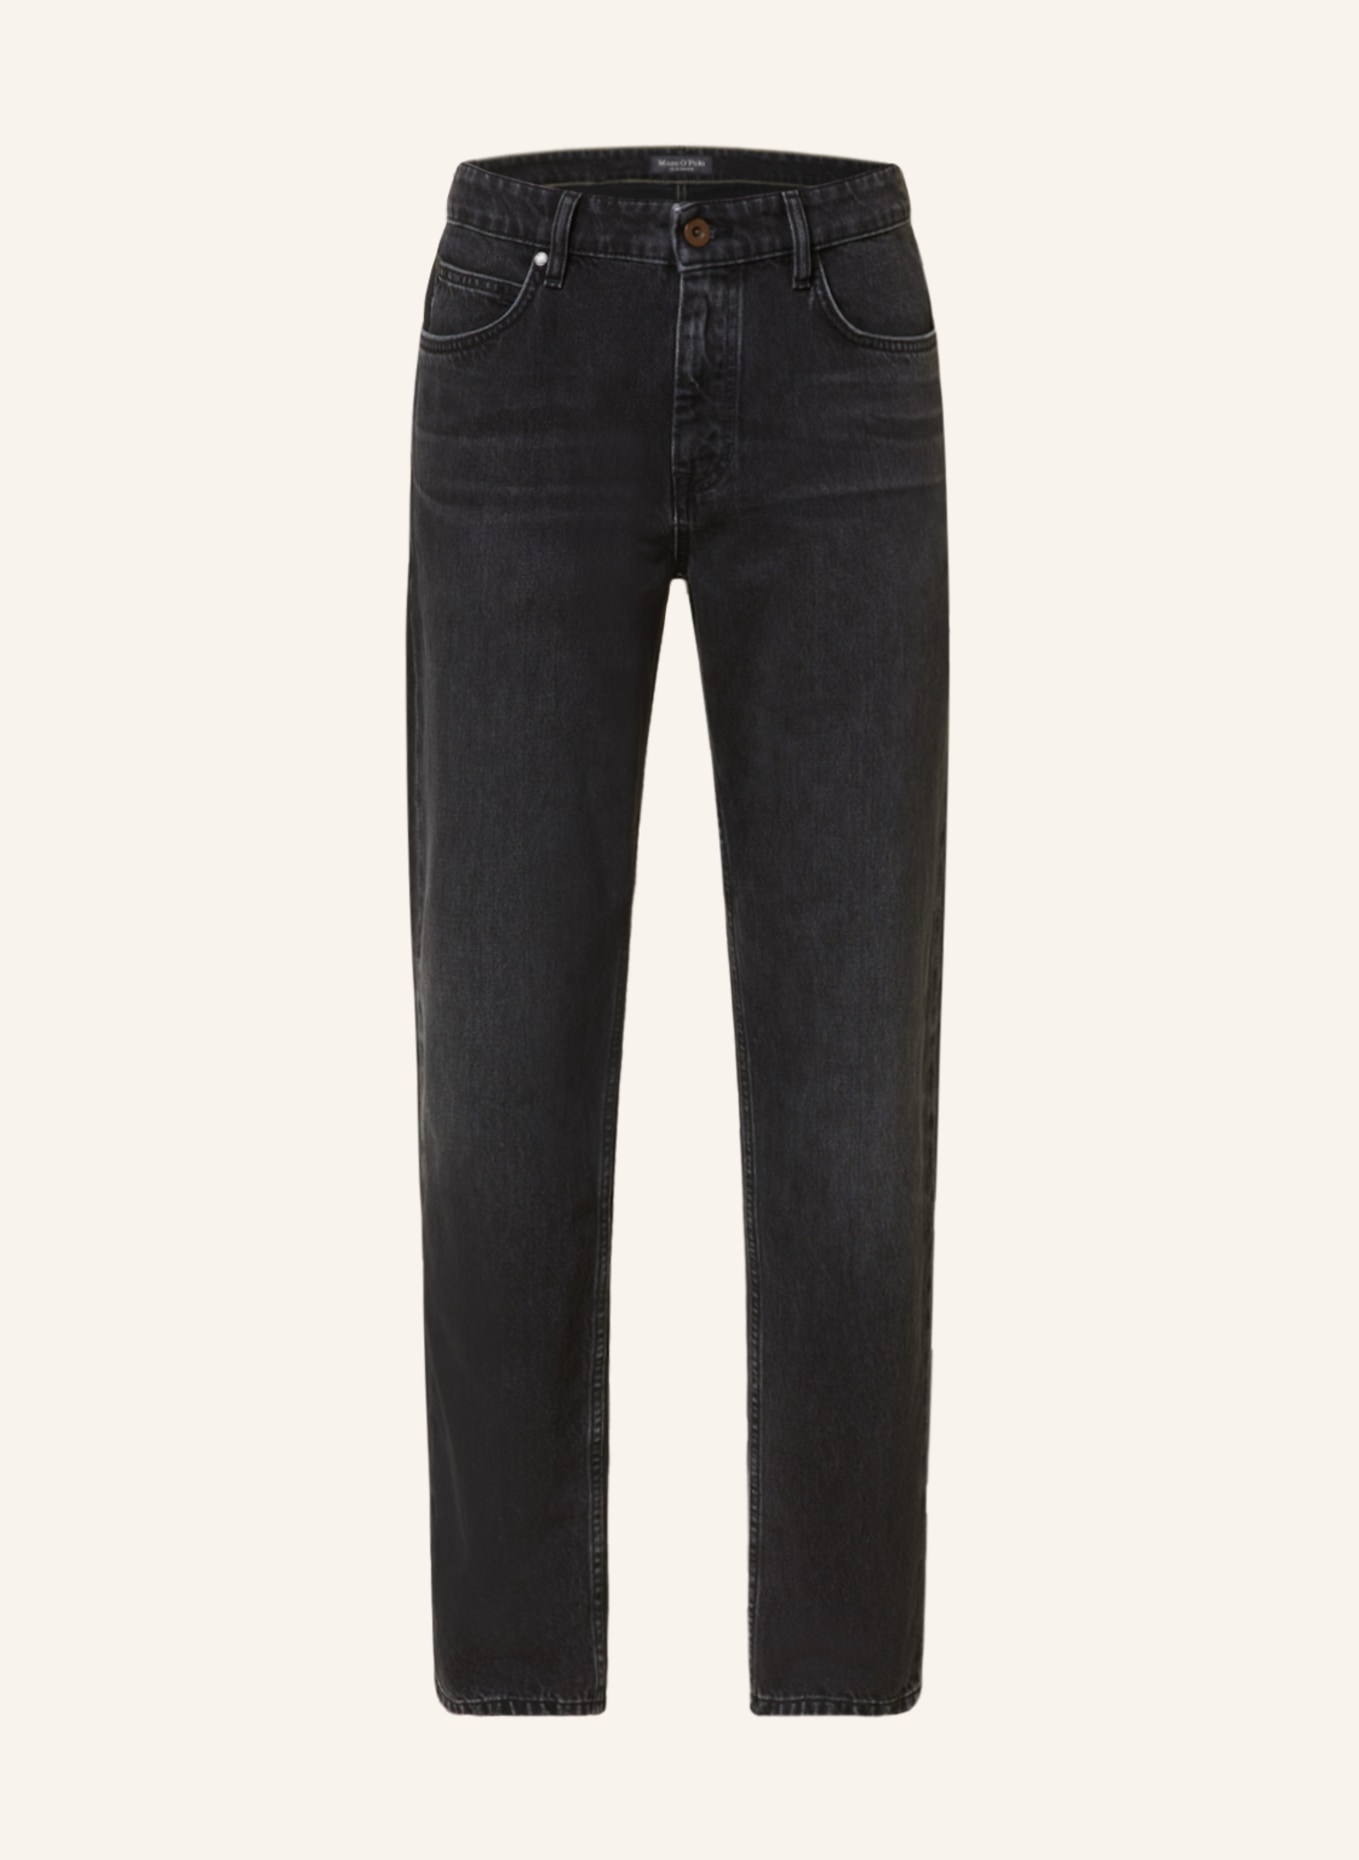 Marc O'Polo Jeans tapered fit, Color: 030 Black od black wash (Image 1)